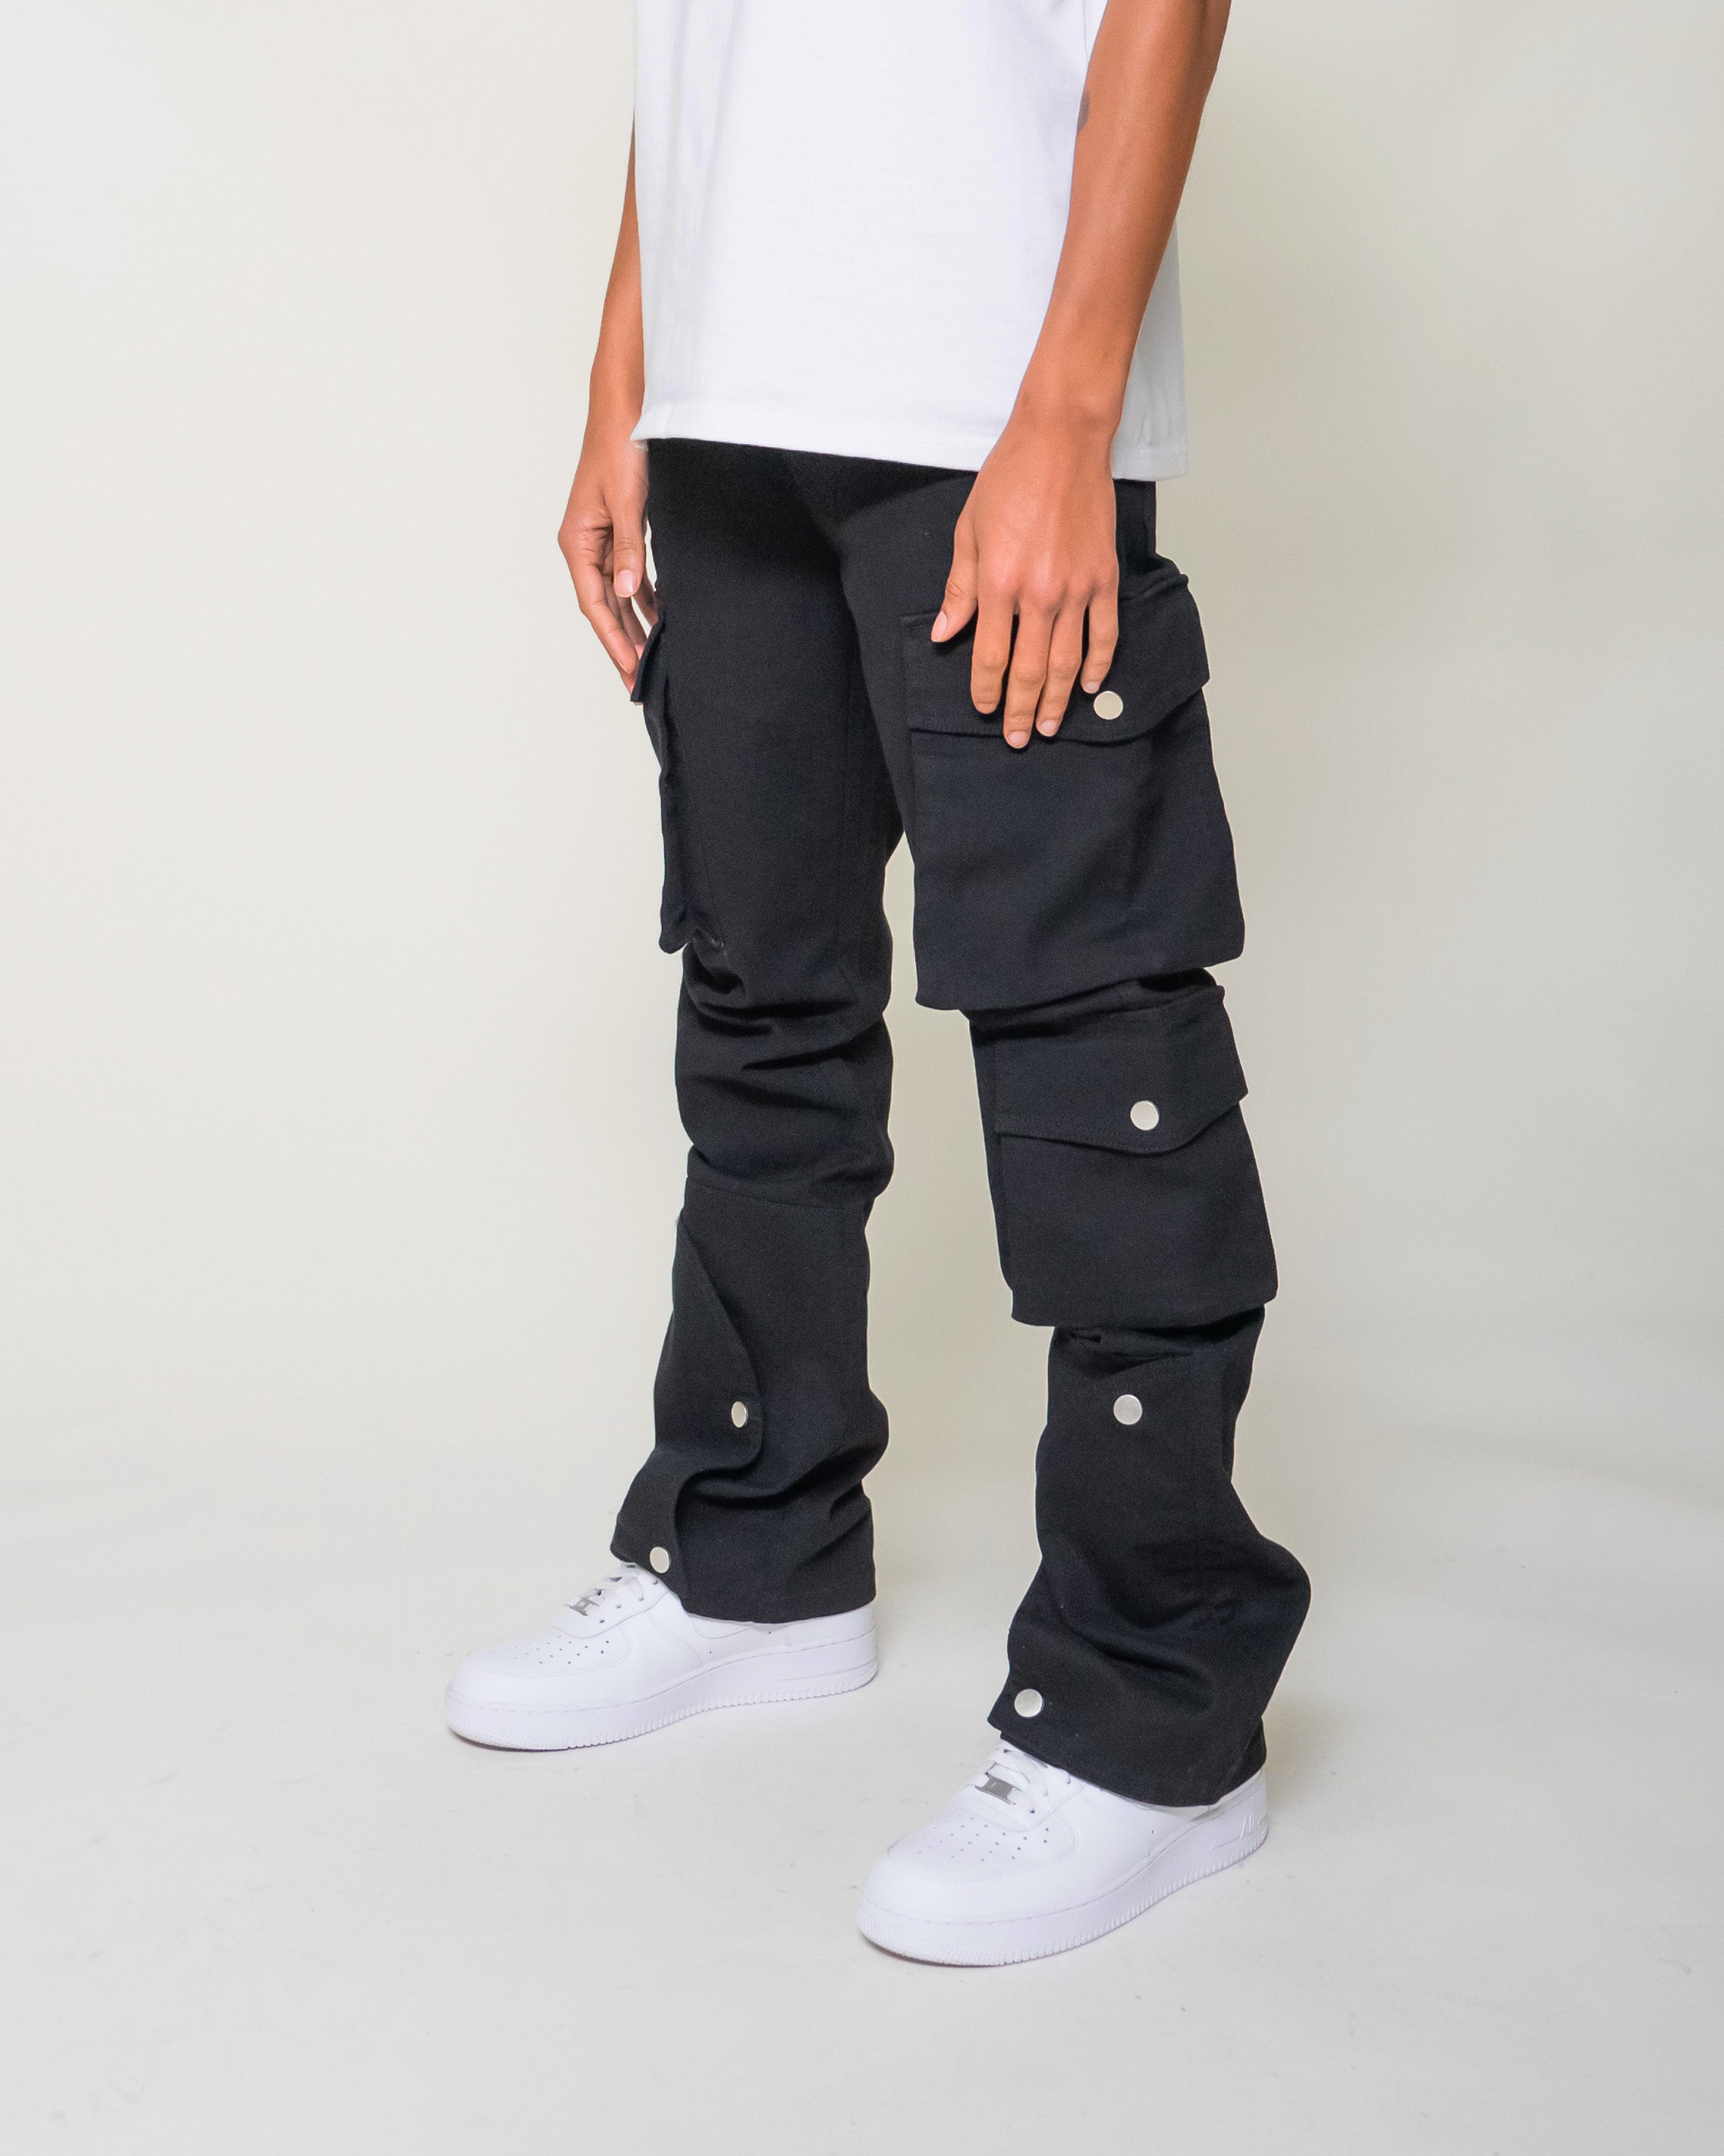 EPTM Clean Pocket Flare Pants - Black XL/36